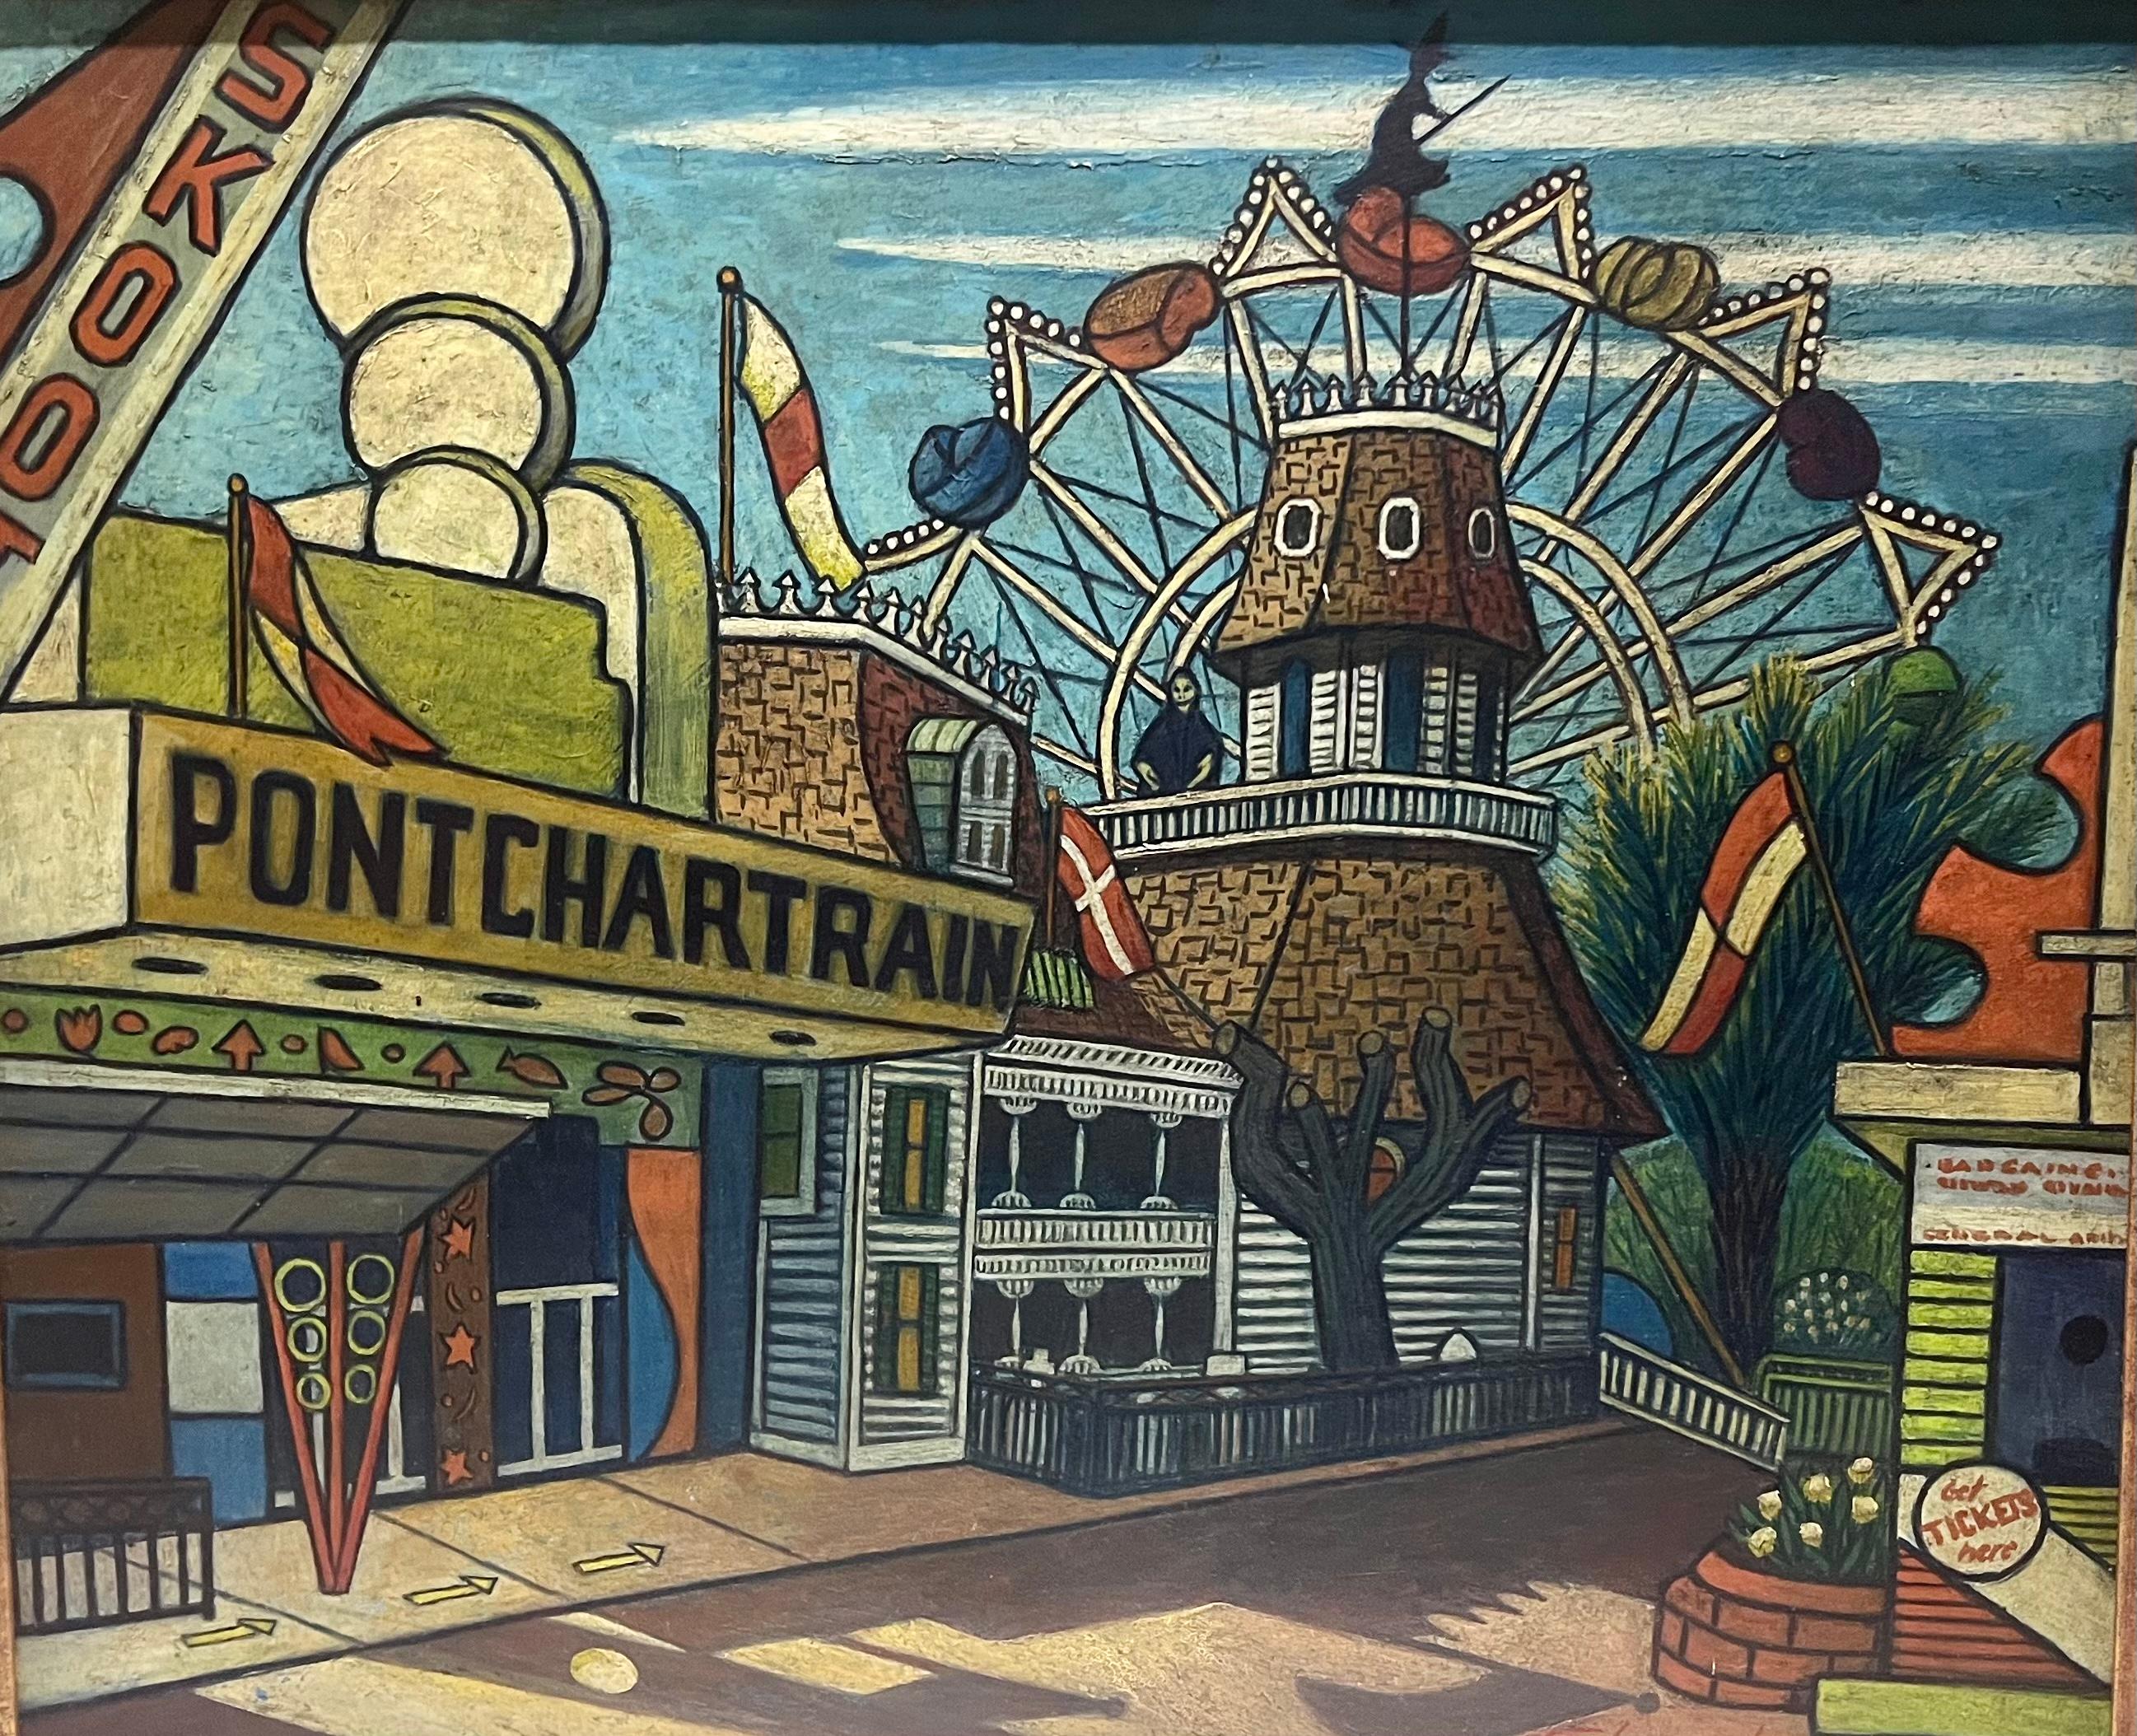 PONCHARTRAIN Louisiana New Orleans Beach AMUSEMENT PARK Ferris Wheel CARNIVAL - Painting by Laurence Edwardson